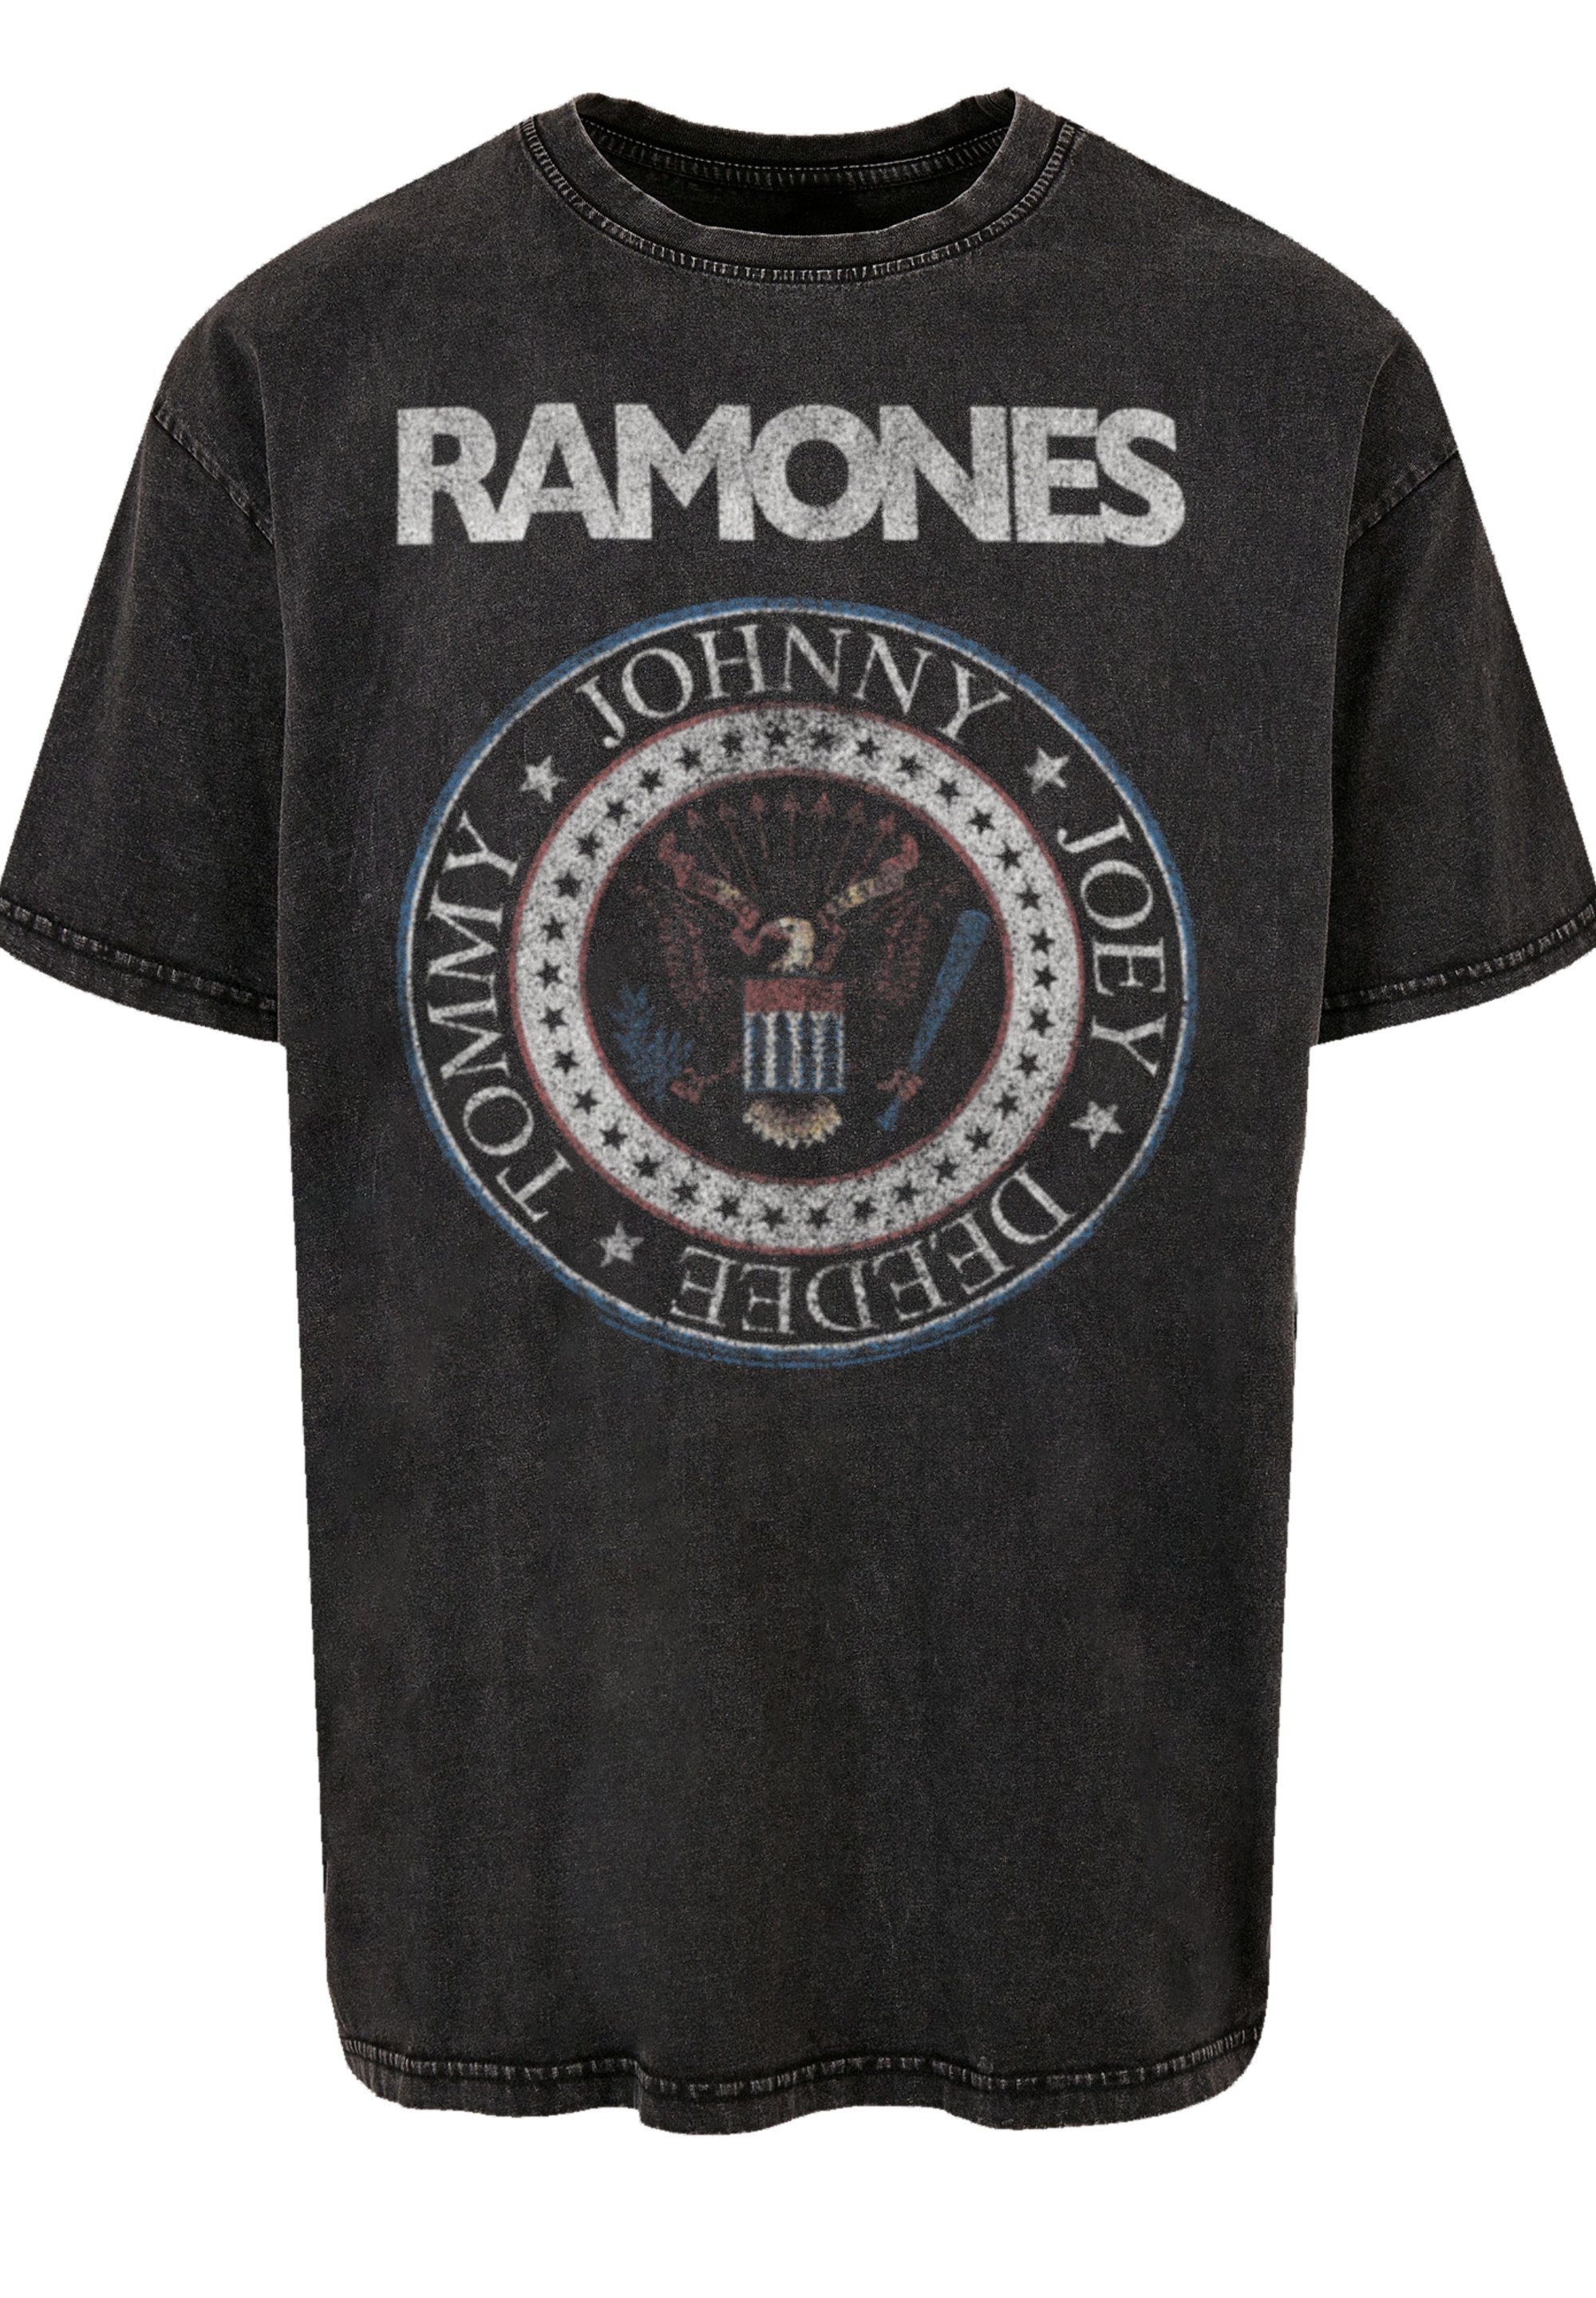 Musik Ramones Qualität, And Rock T-Shirt White Premium F4NT4STIC Band, Seal Red Band Rock-Musik schwarz